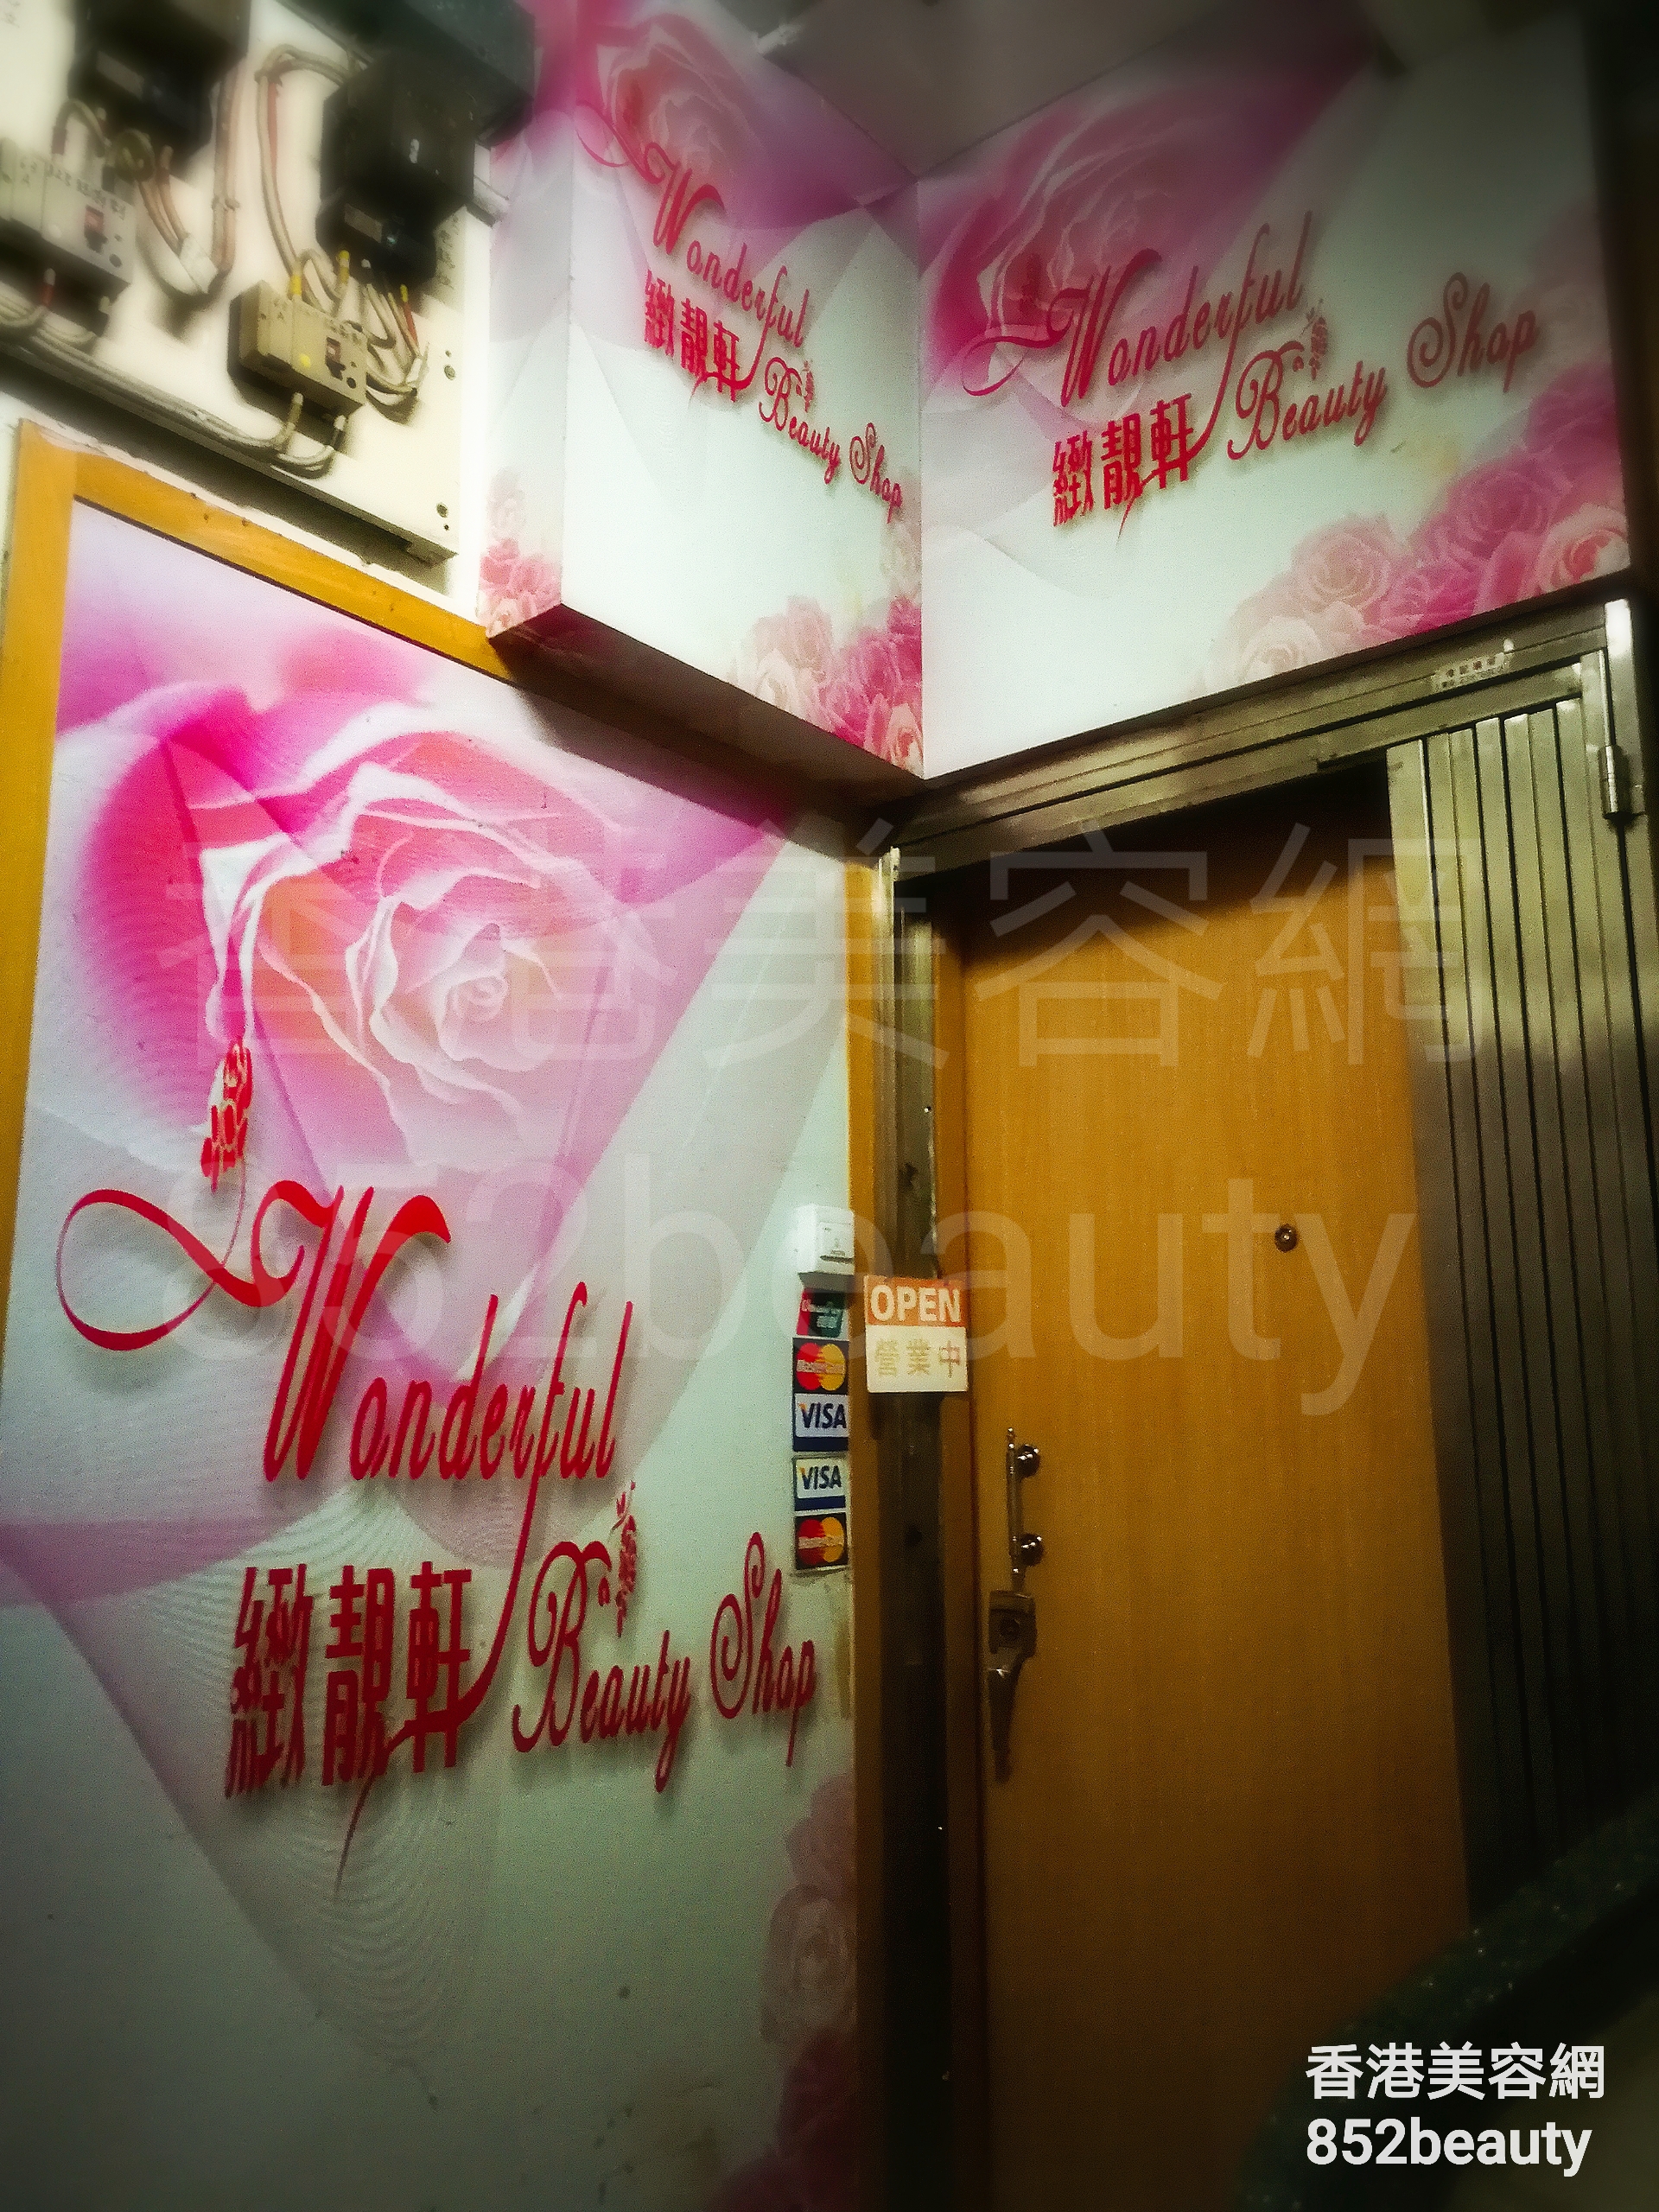 Facial Care: 緻靚軒 Wonderful Beauty Shop